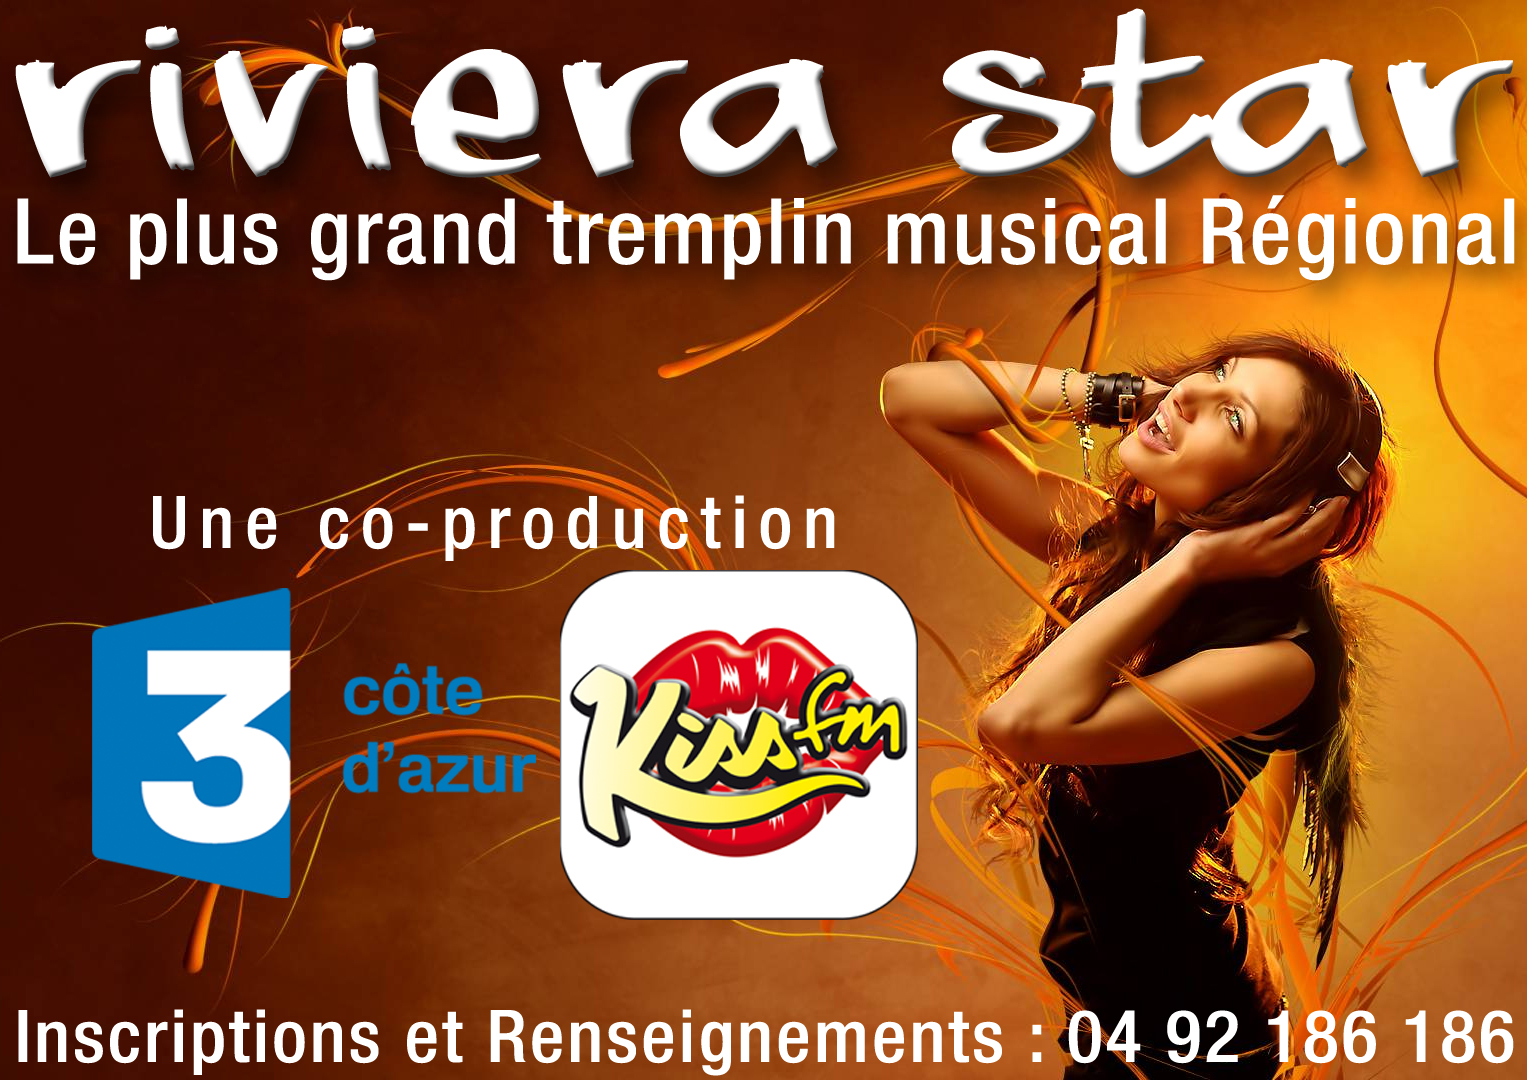 Kiss FM lance le tremplin Riviera Star